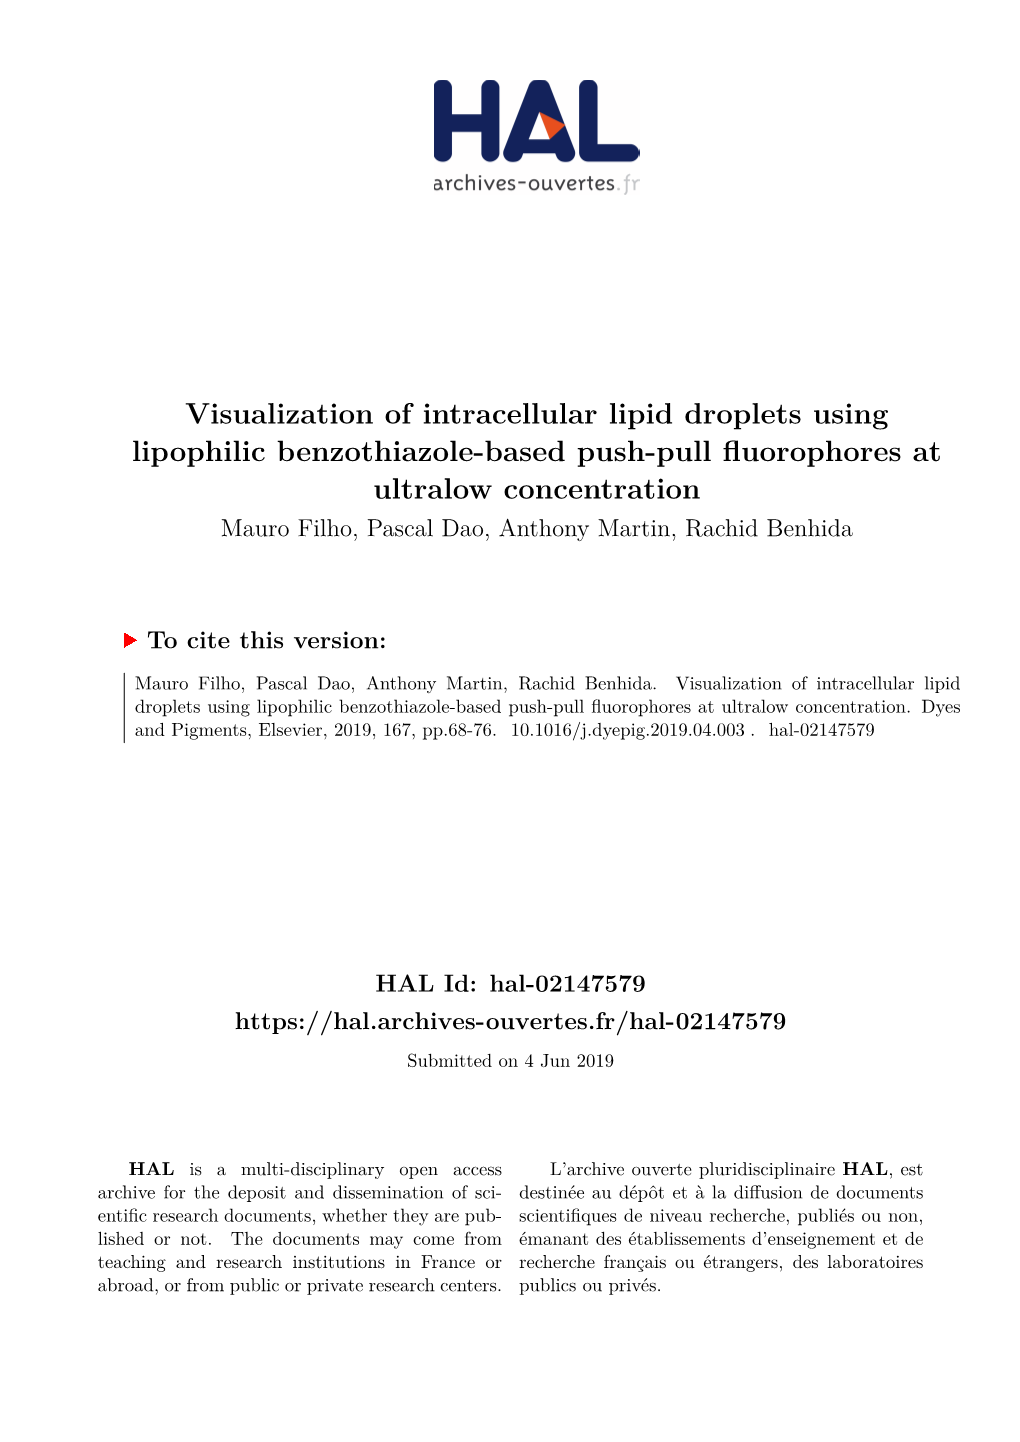 Visualization of Intracellular Lipid Droplets Using Lipophilic